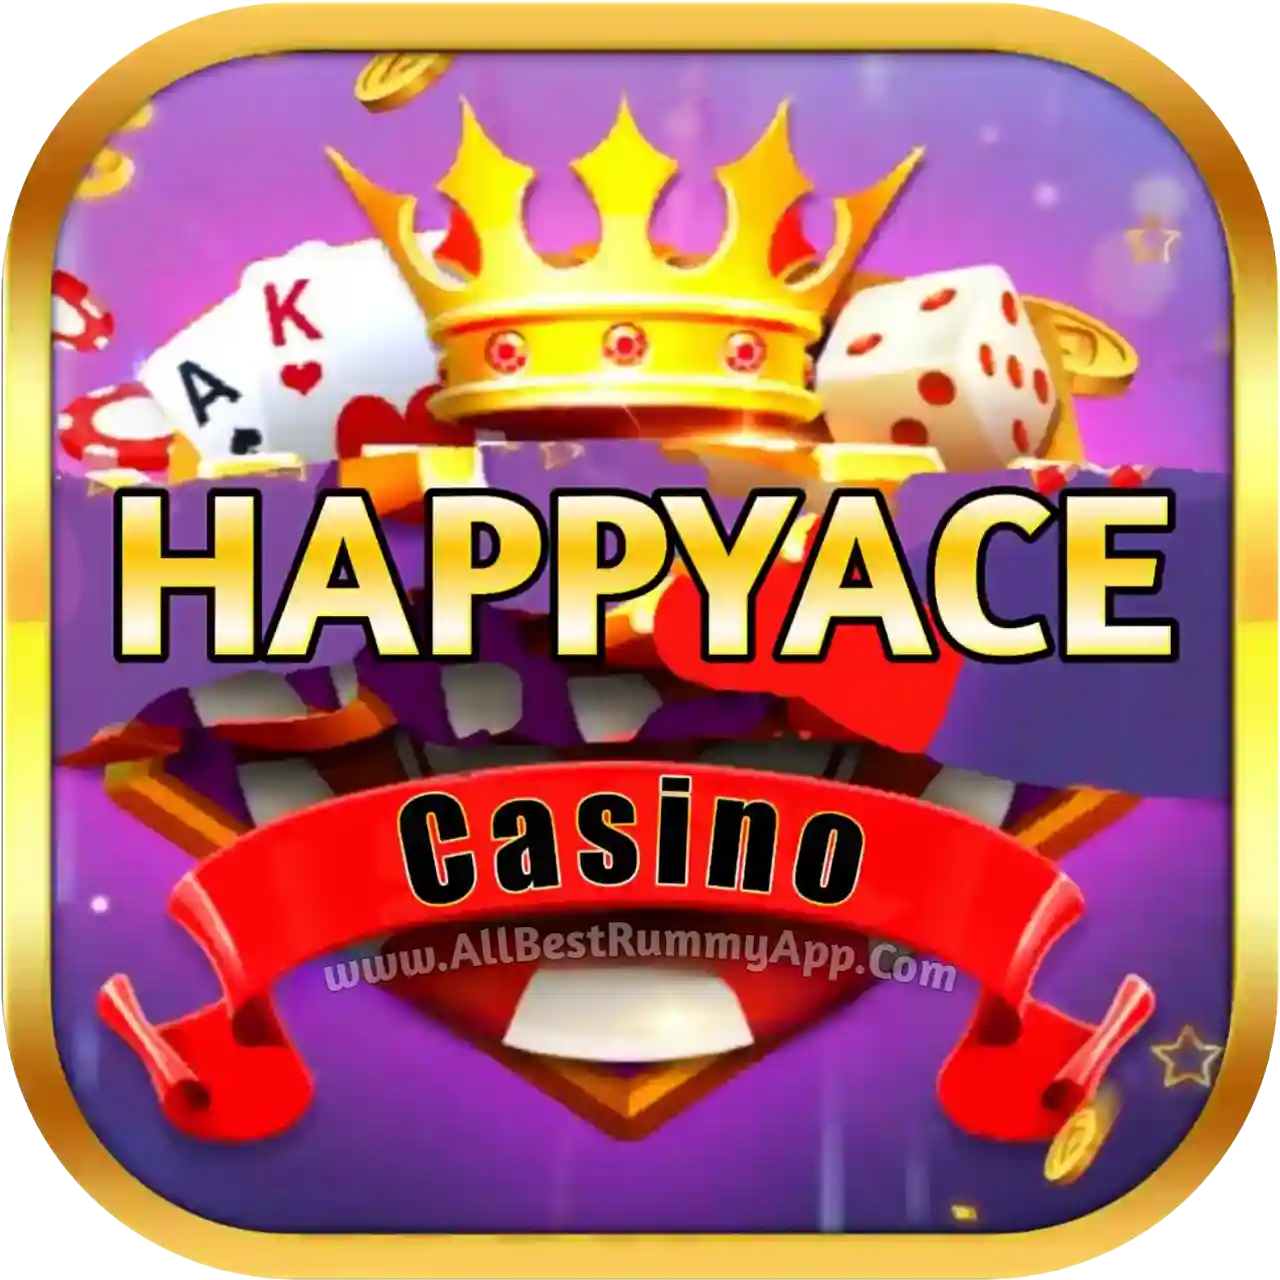 Happy Ace Casino - All Best Rummy App